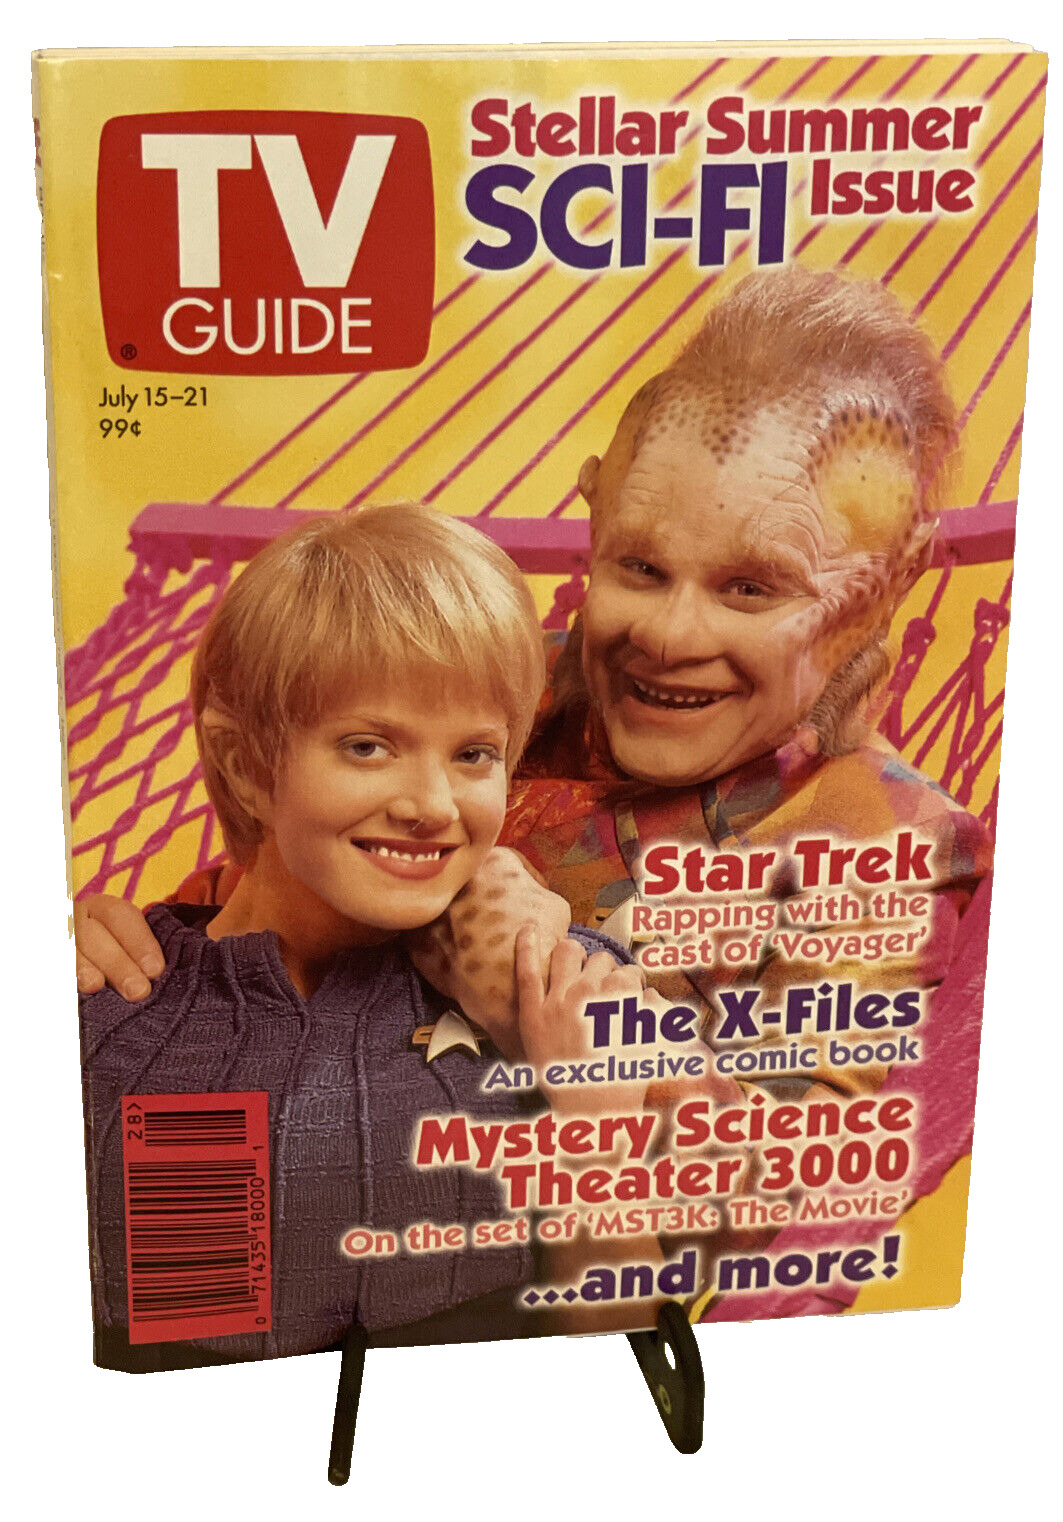 TV Guide Stellar Summer SCI-FI Issue July 15-21 1995 Star Trek Voyager